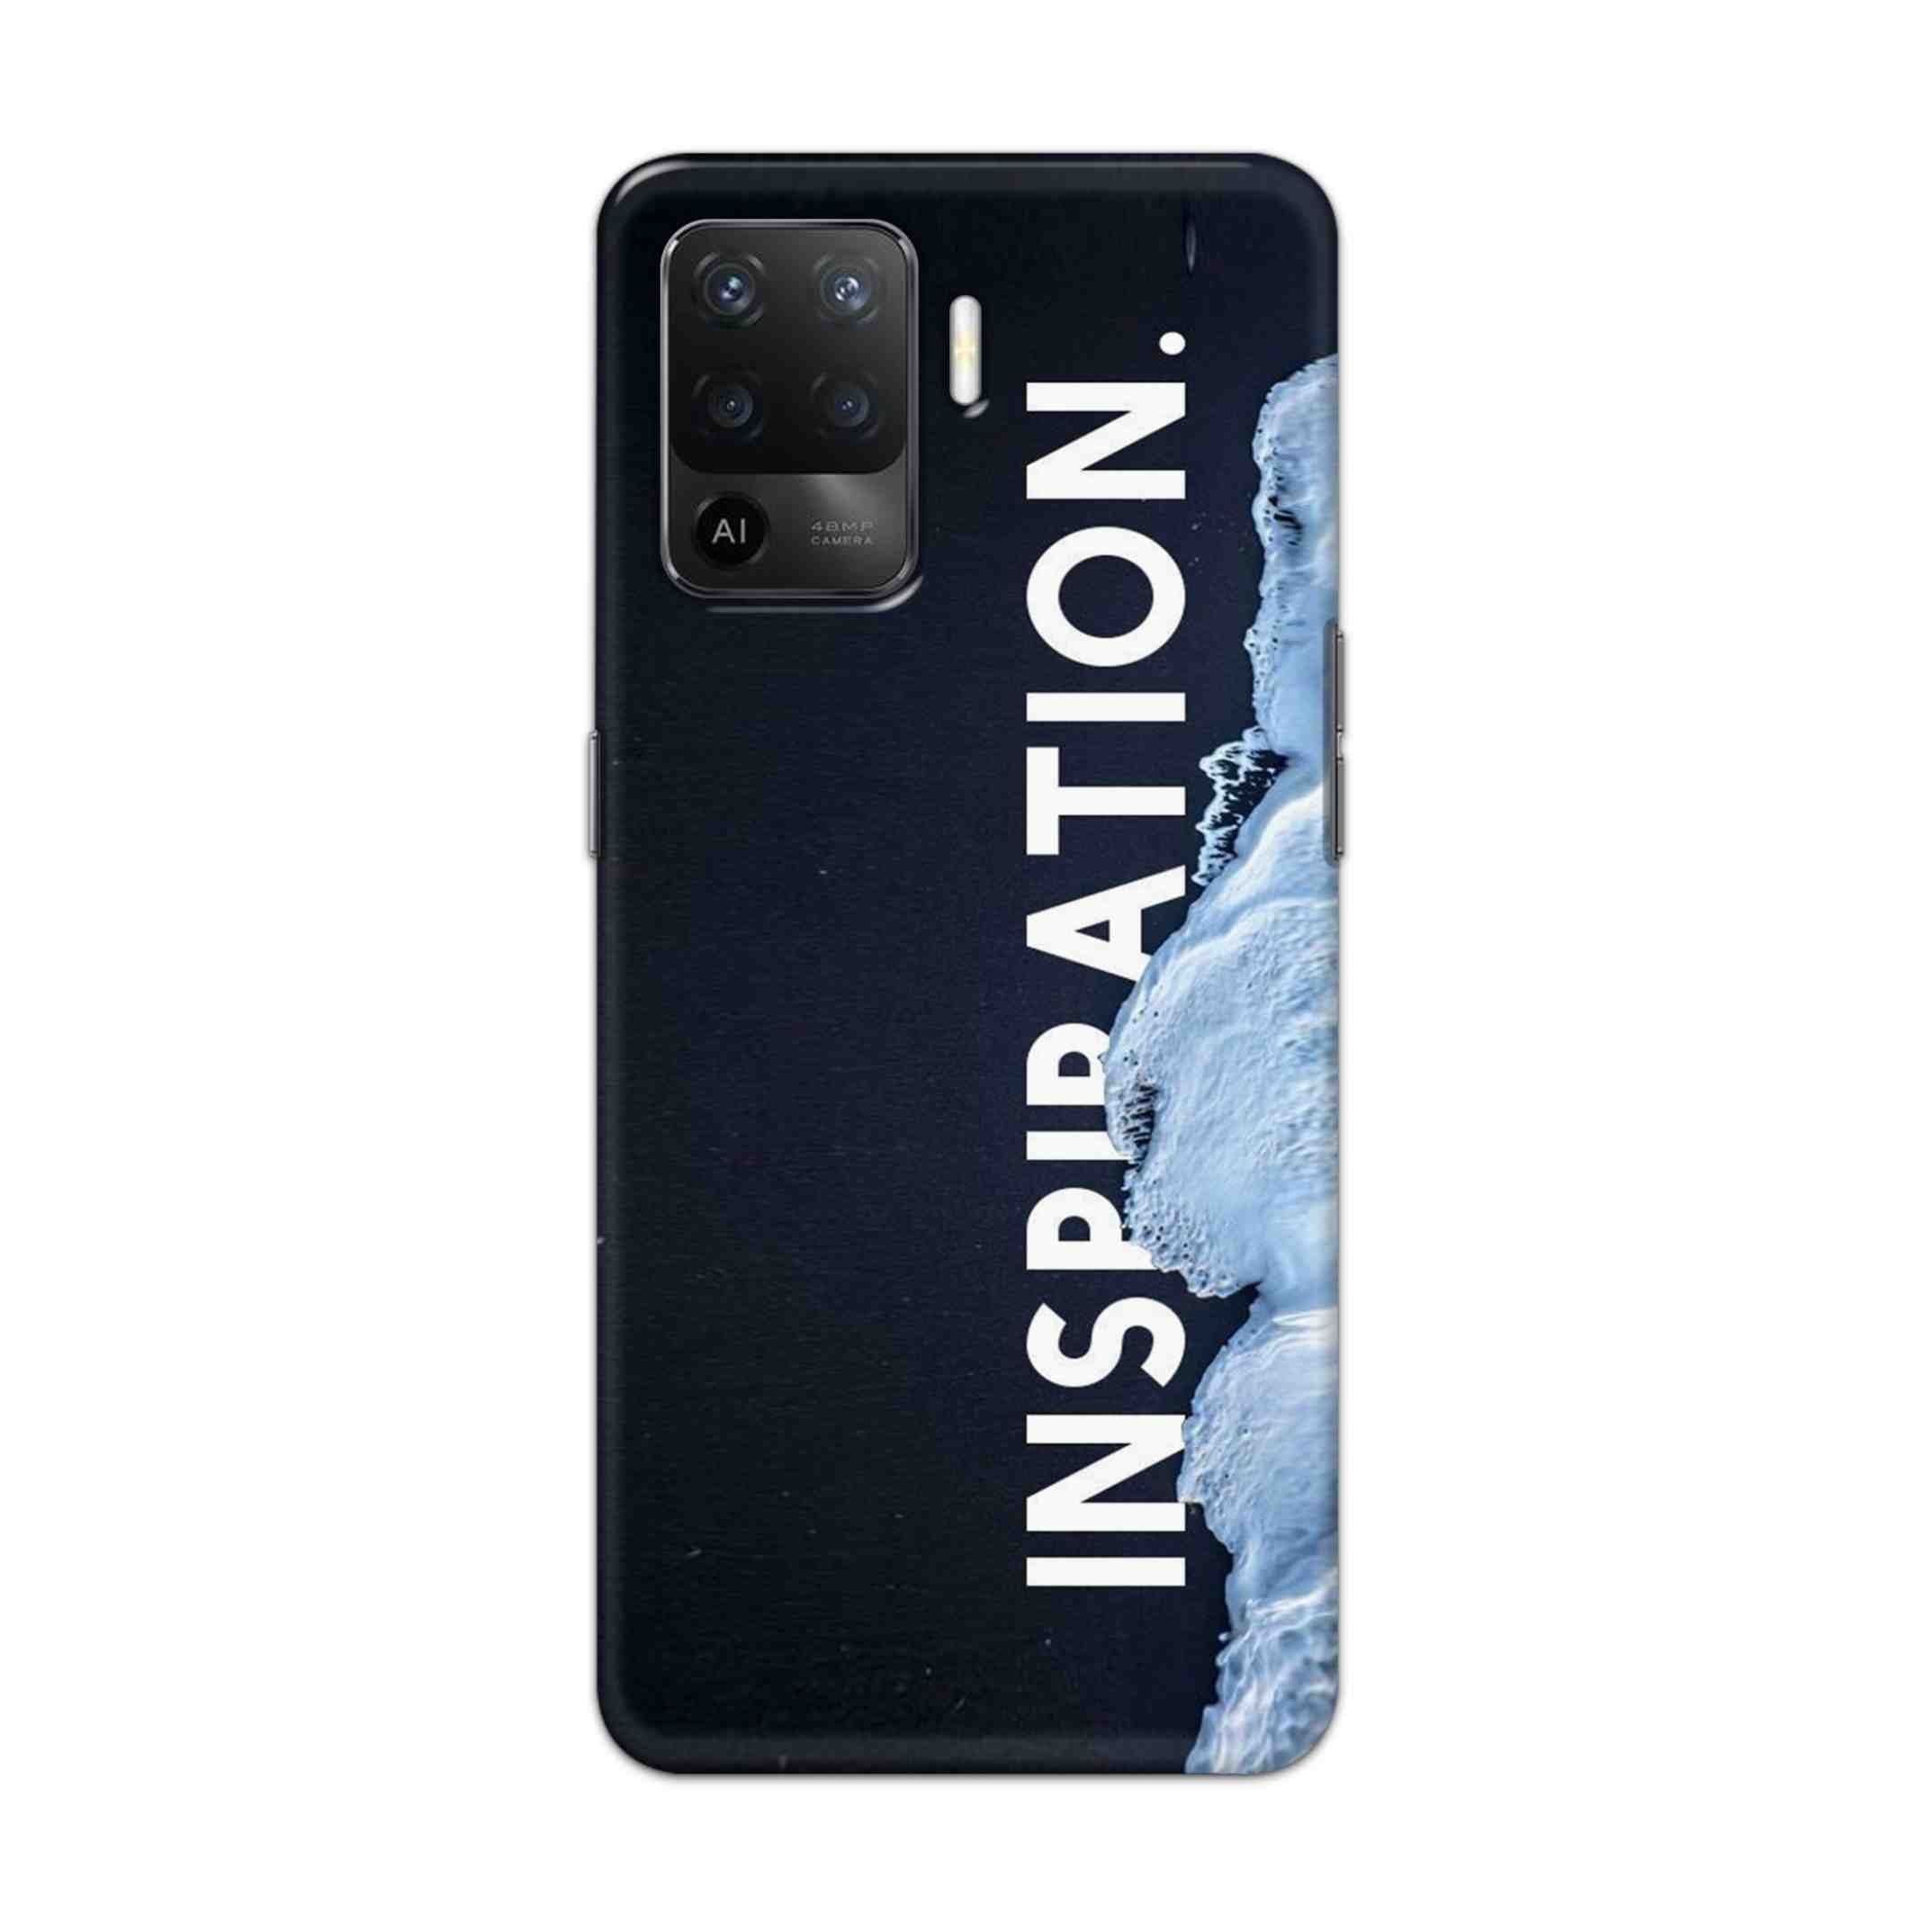 Buy Inspiration Hard Back Mobile Phone Case Cover For Oppo F19 Pro Online